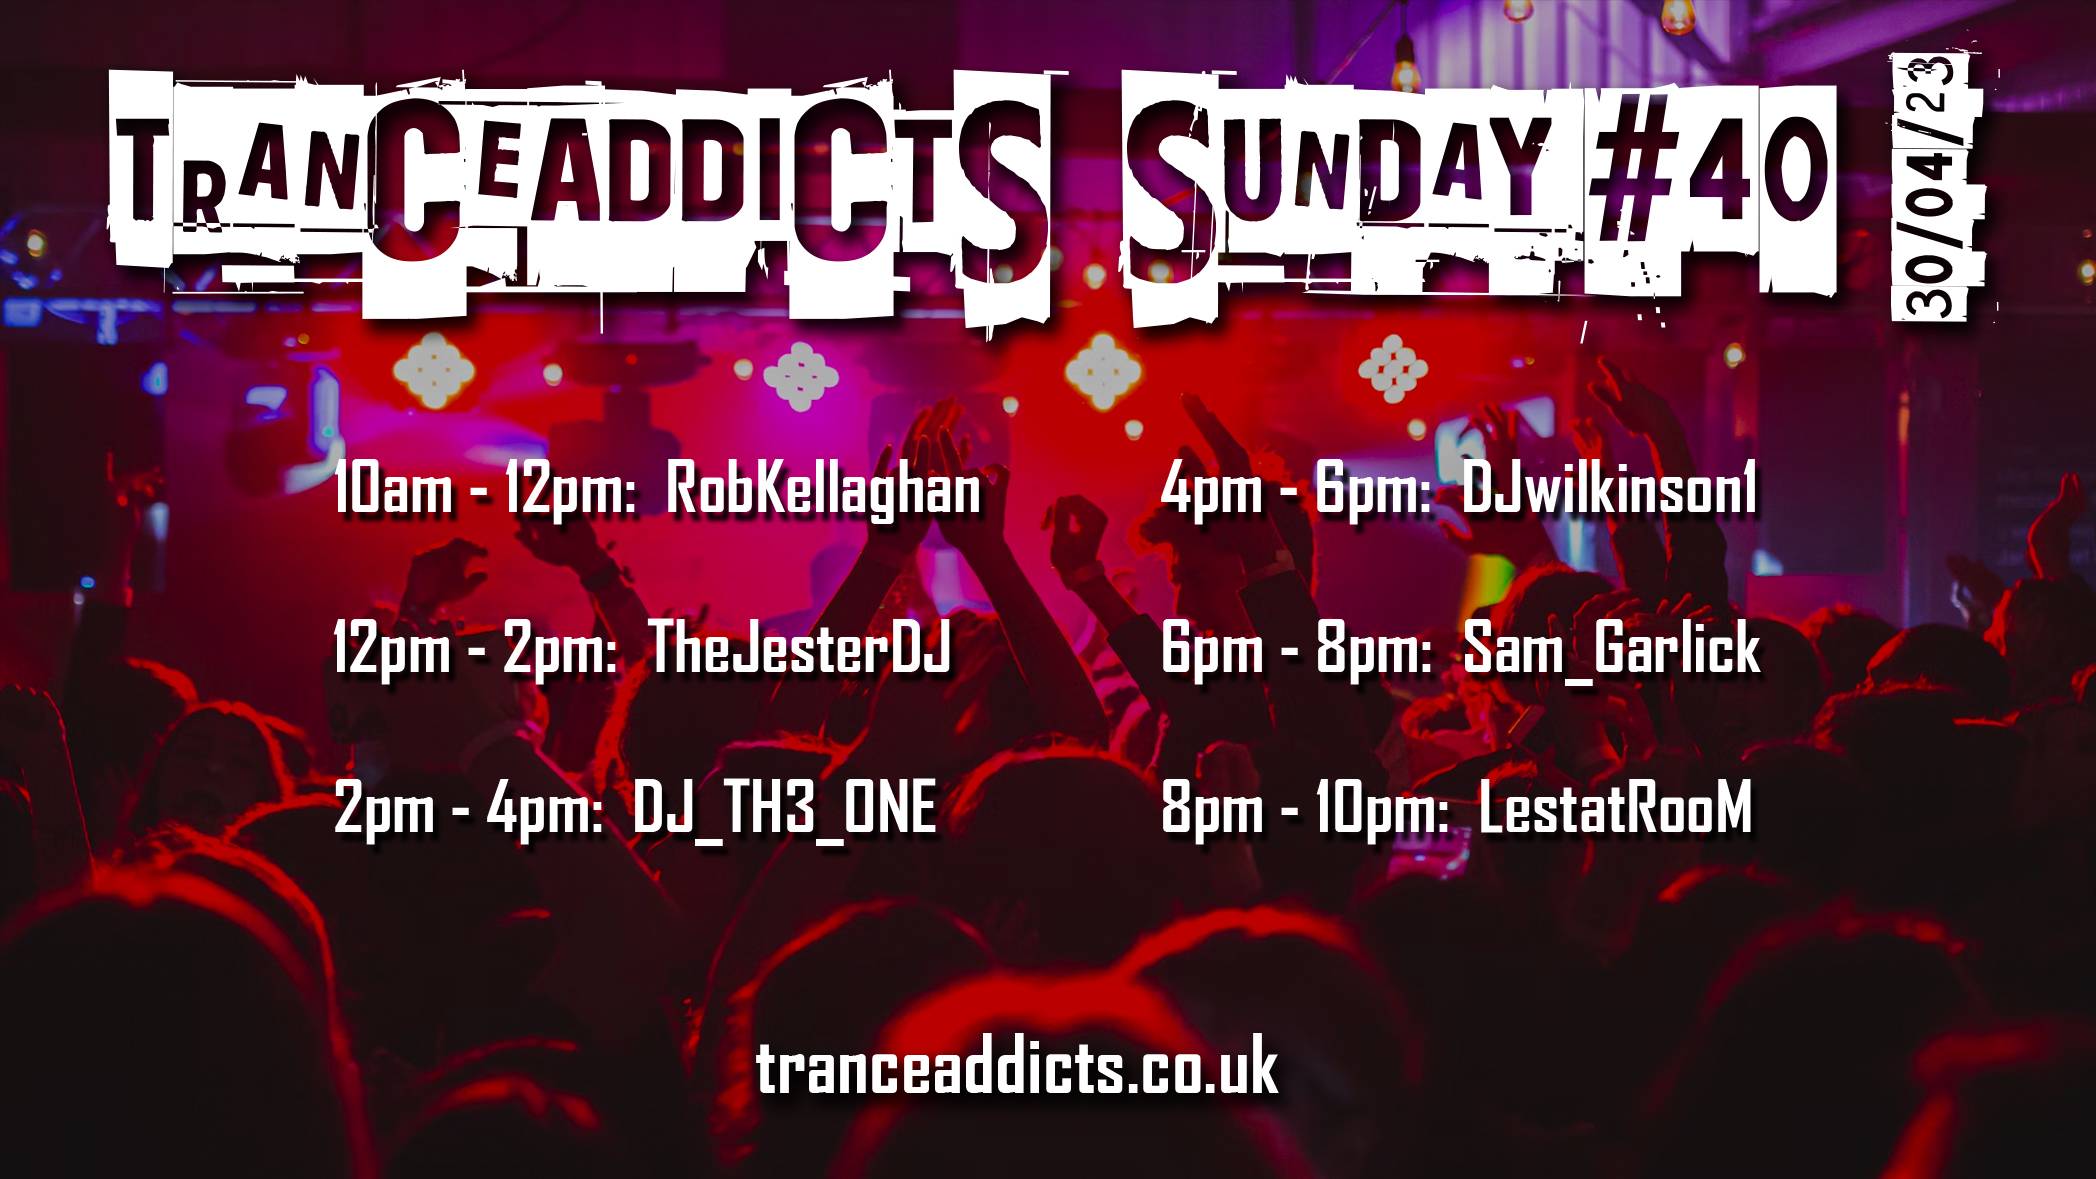 TranceAddicts Sunday #40